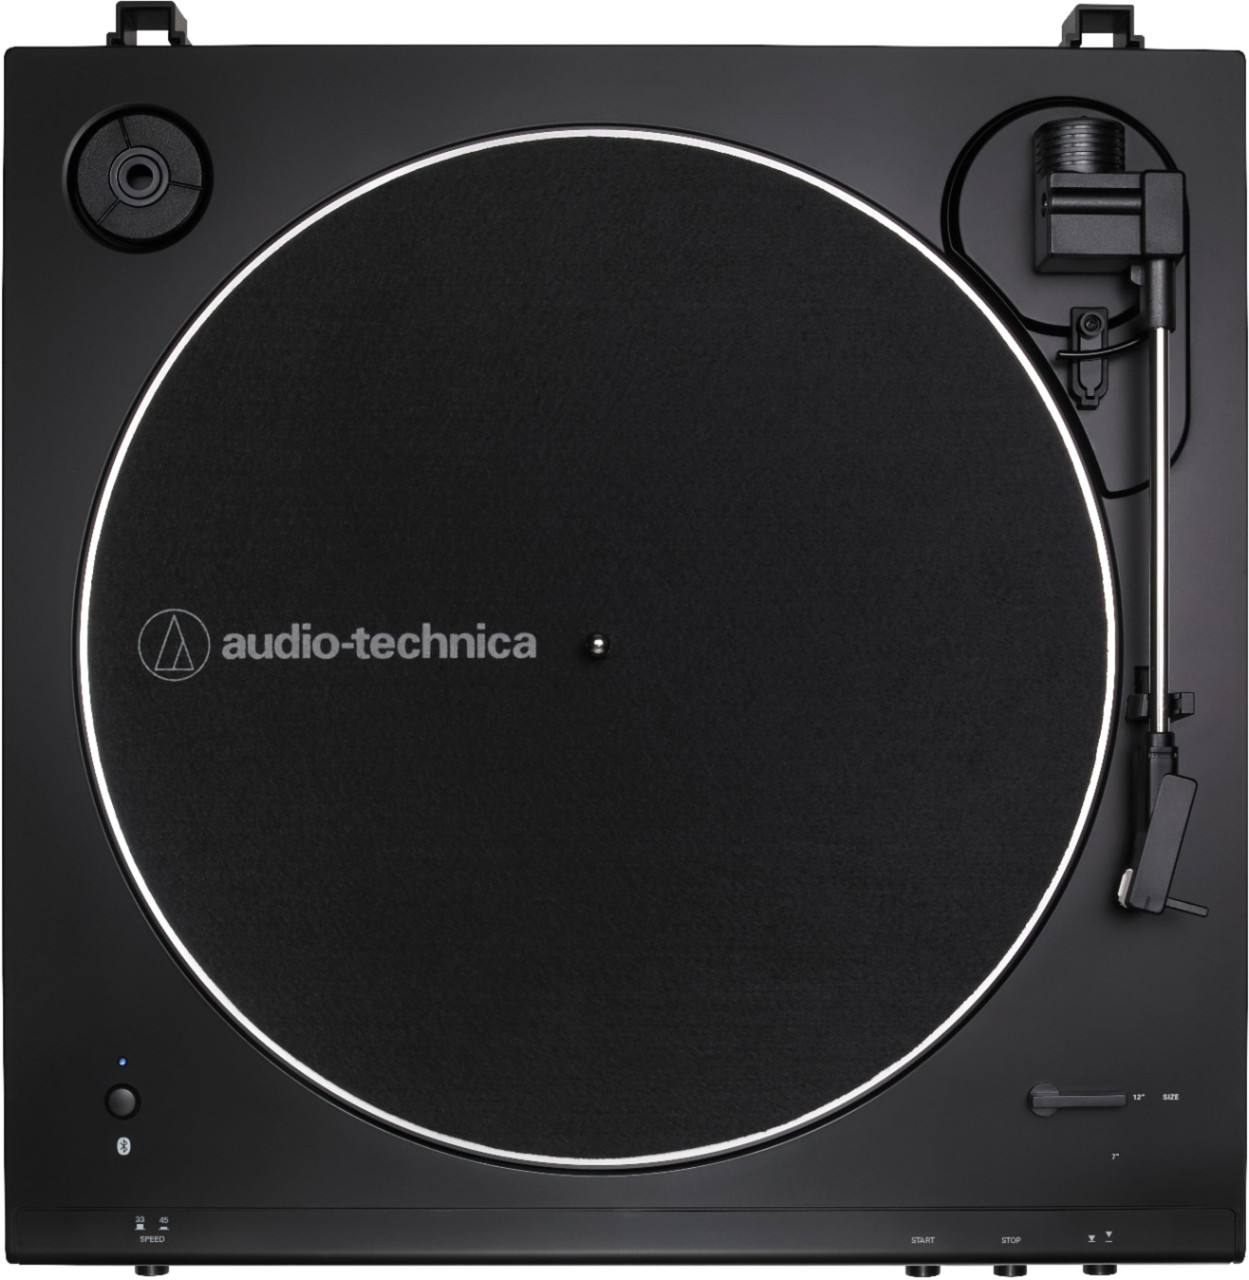 Audio-Technica - Bluetooth Stereo Turntable - Black